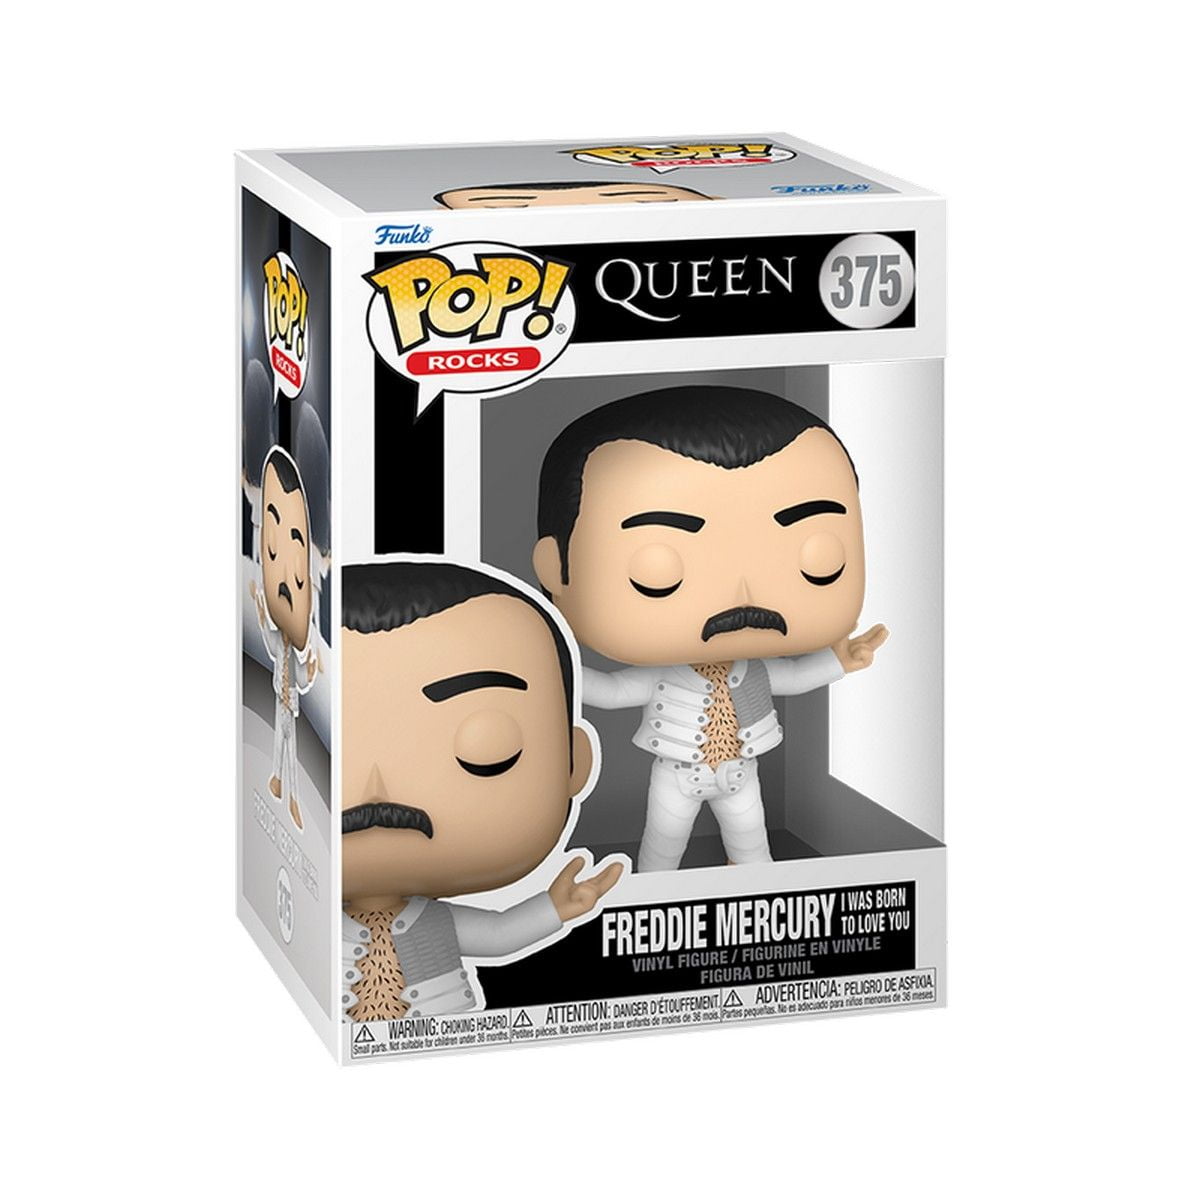 Freddie Mercury - Queen (I was born to love you) - Funko POP! Rocks (375)